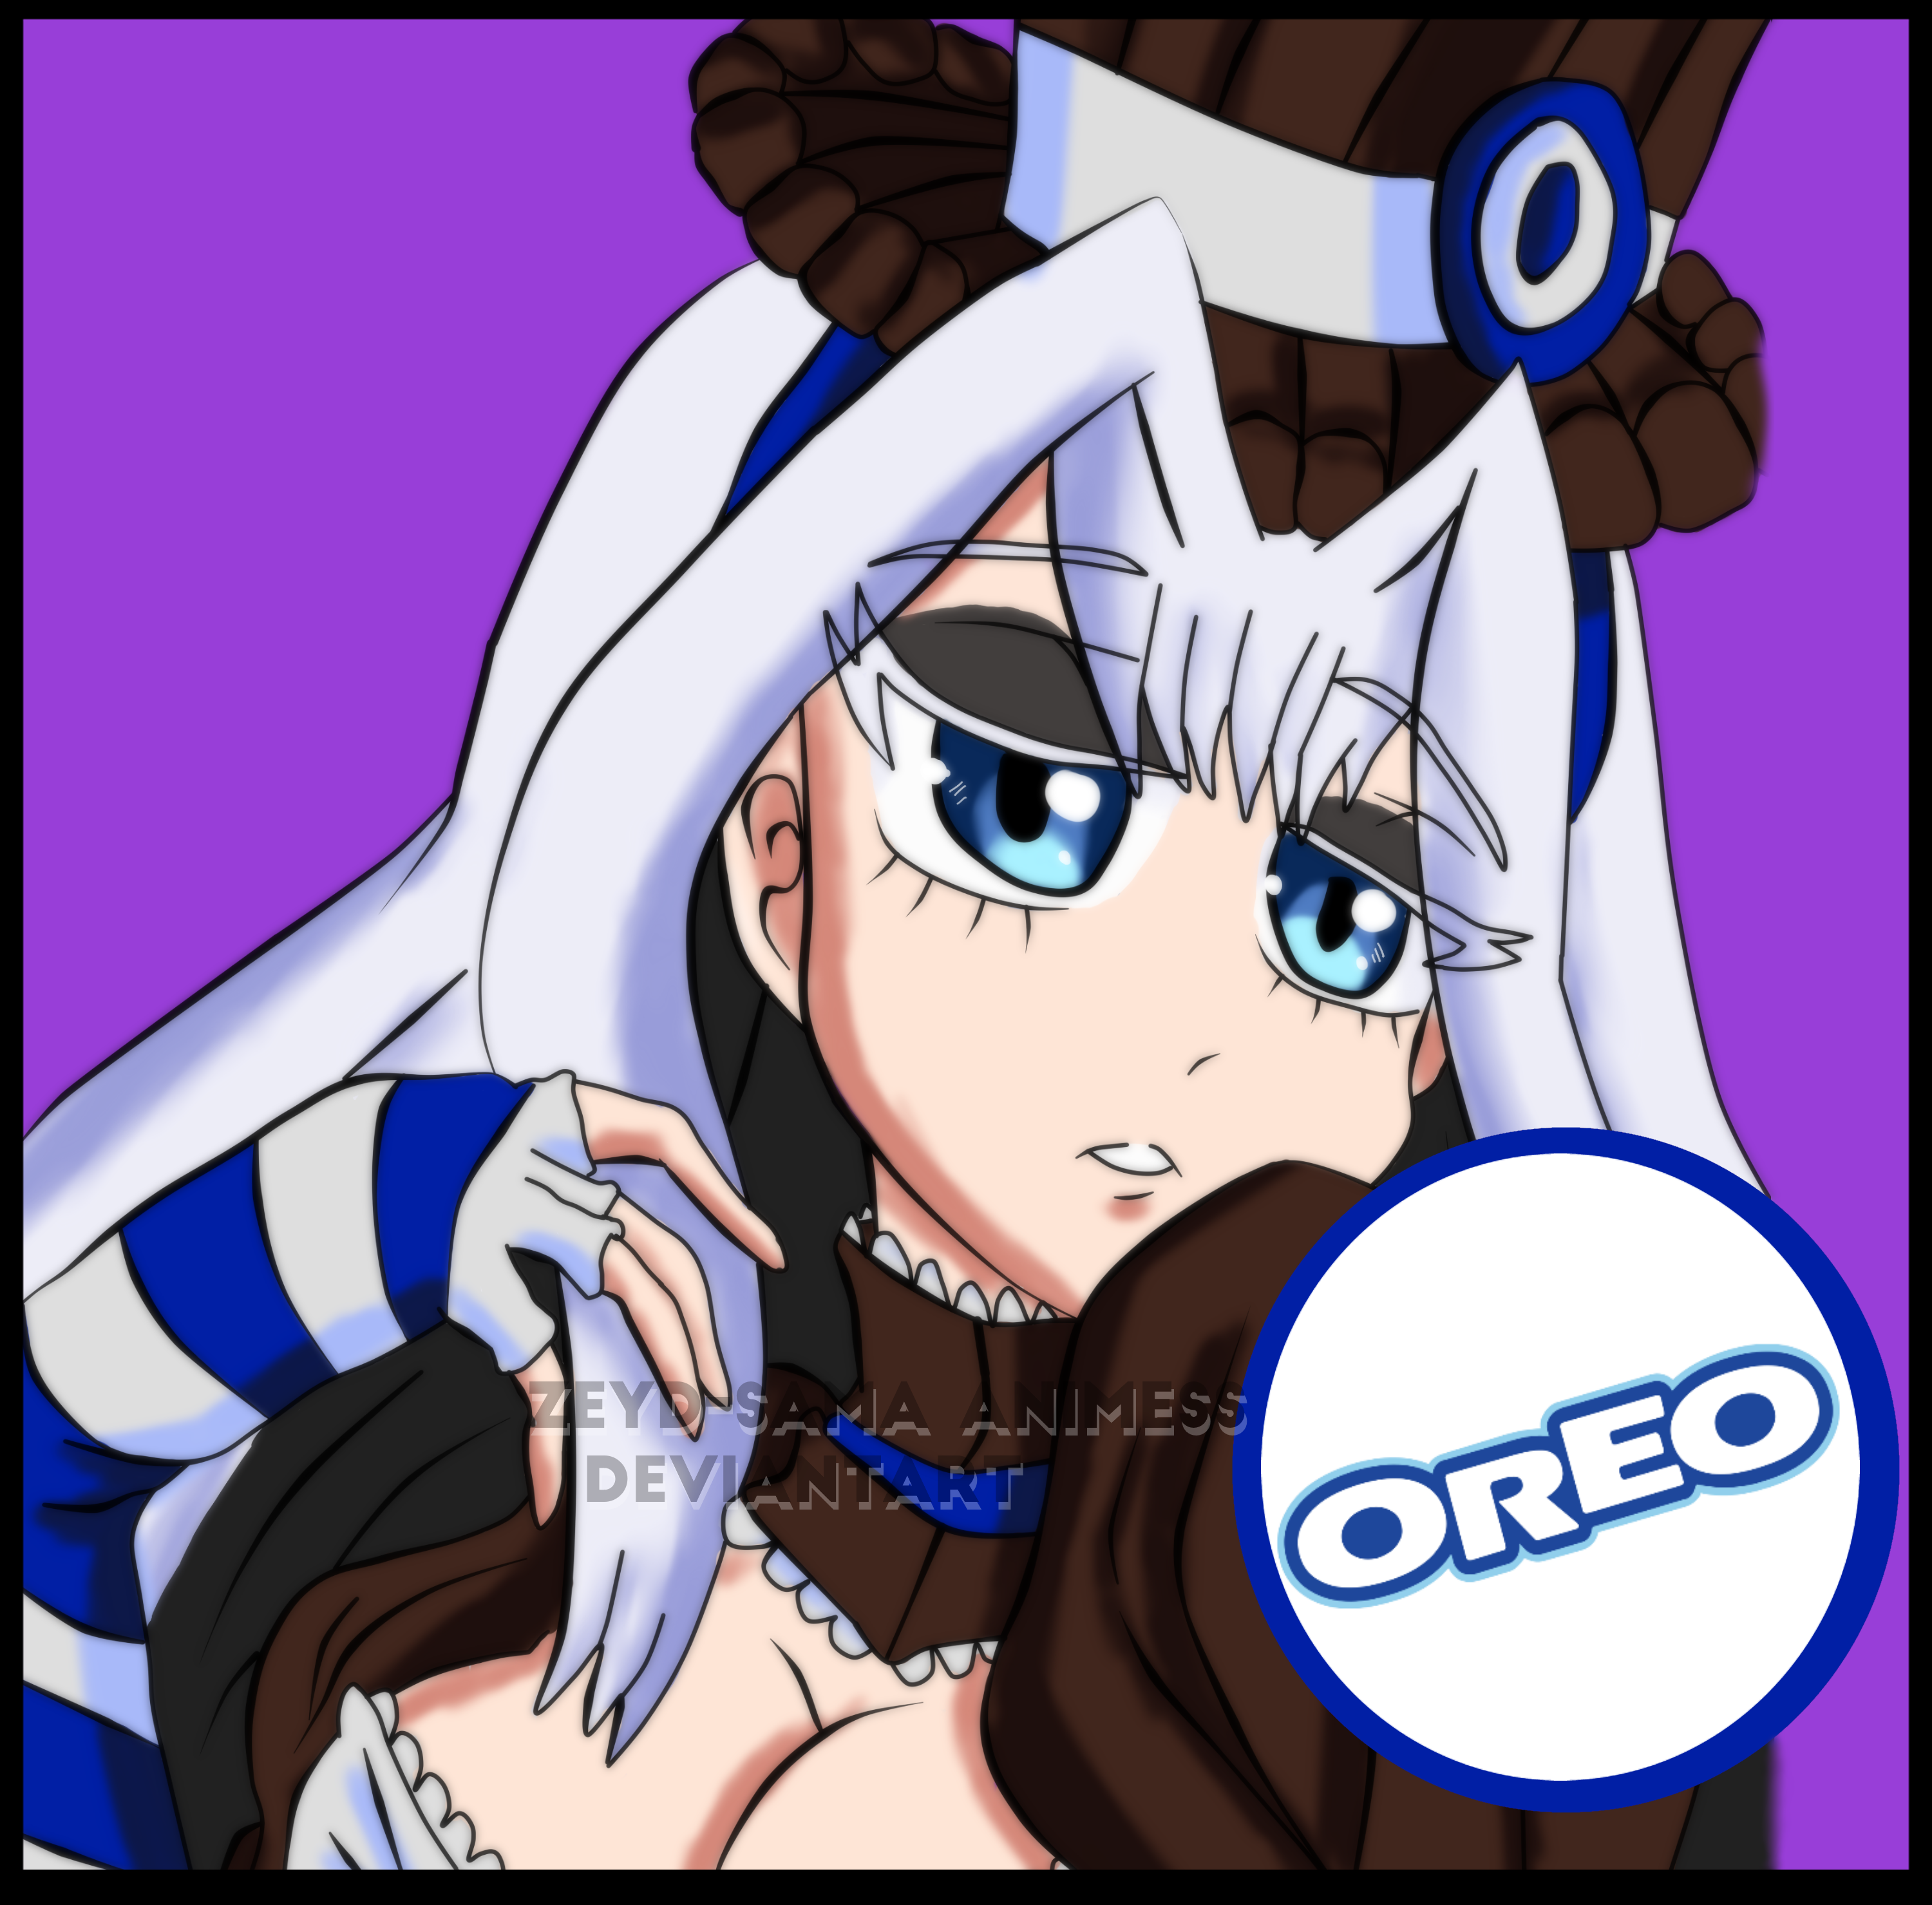 Oreo-Chan/Chocolate Anime Girls by Zeyd-SamaANIMESS on DeviantArt